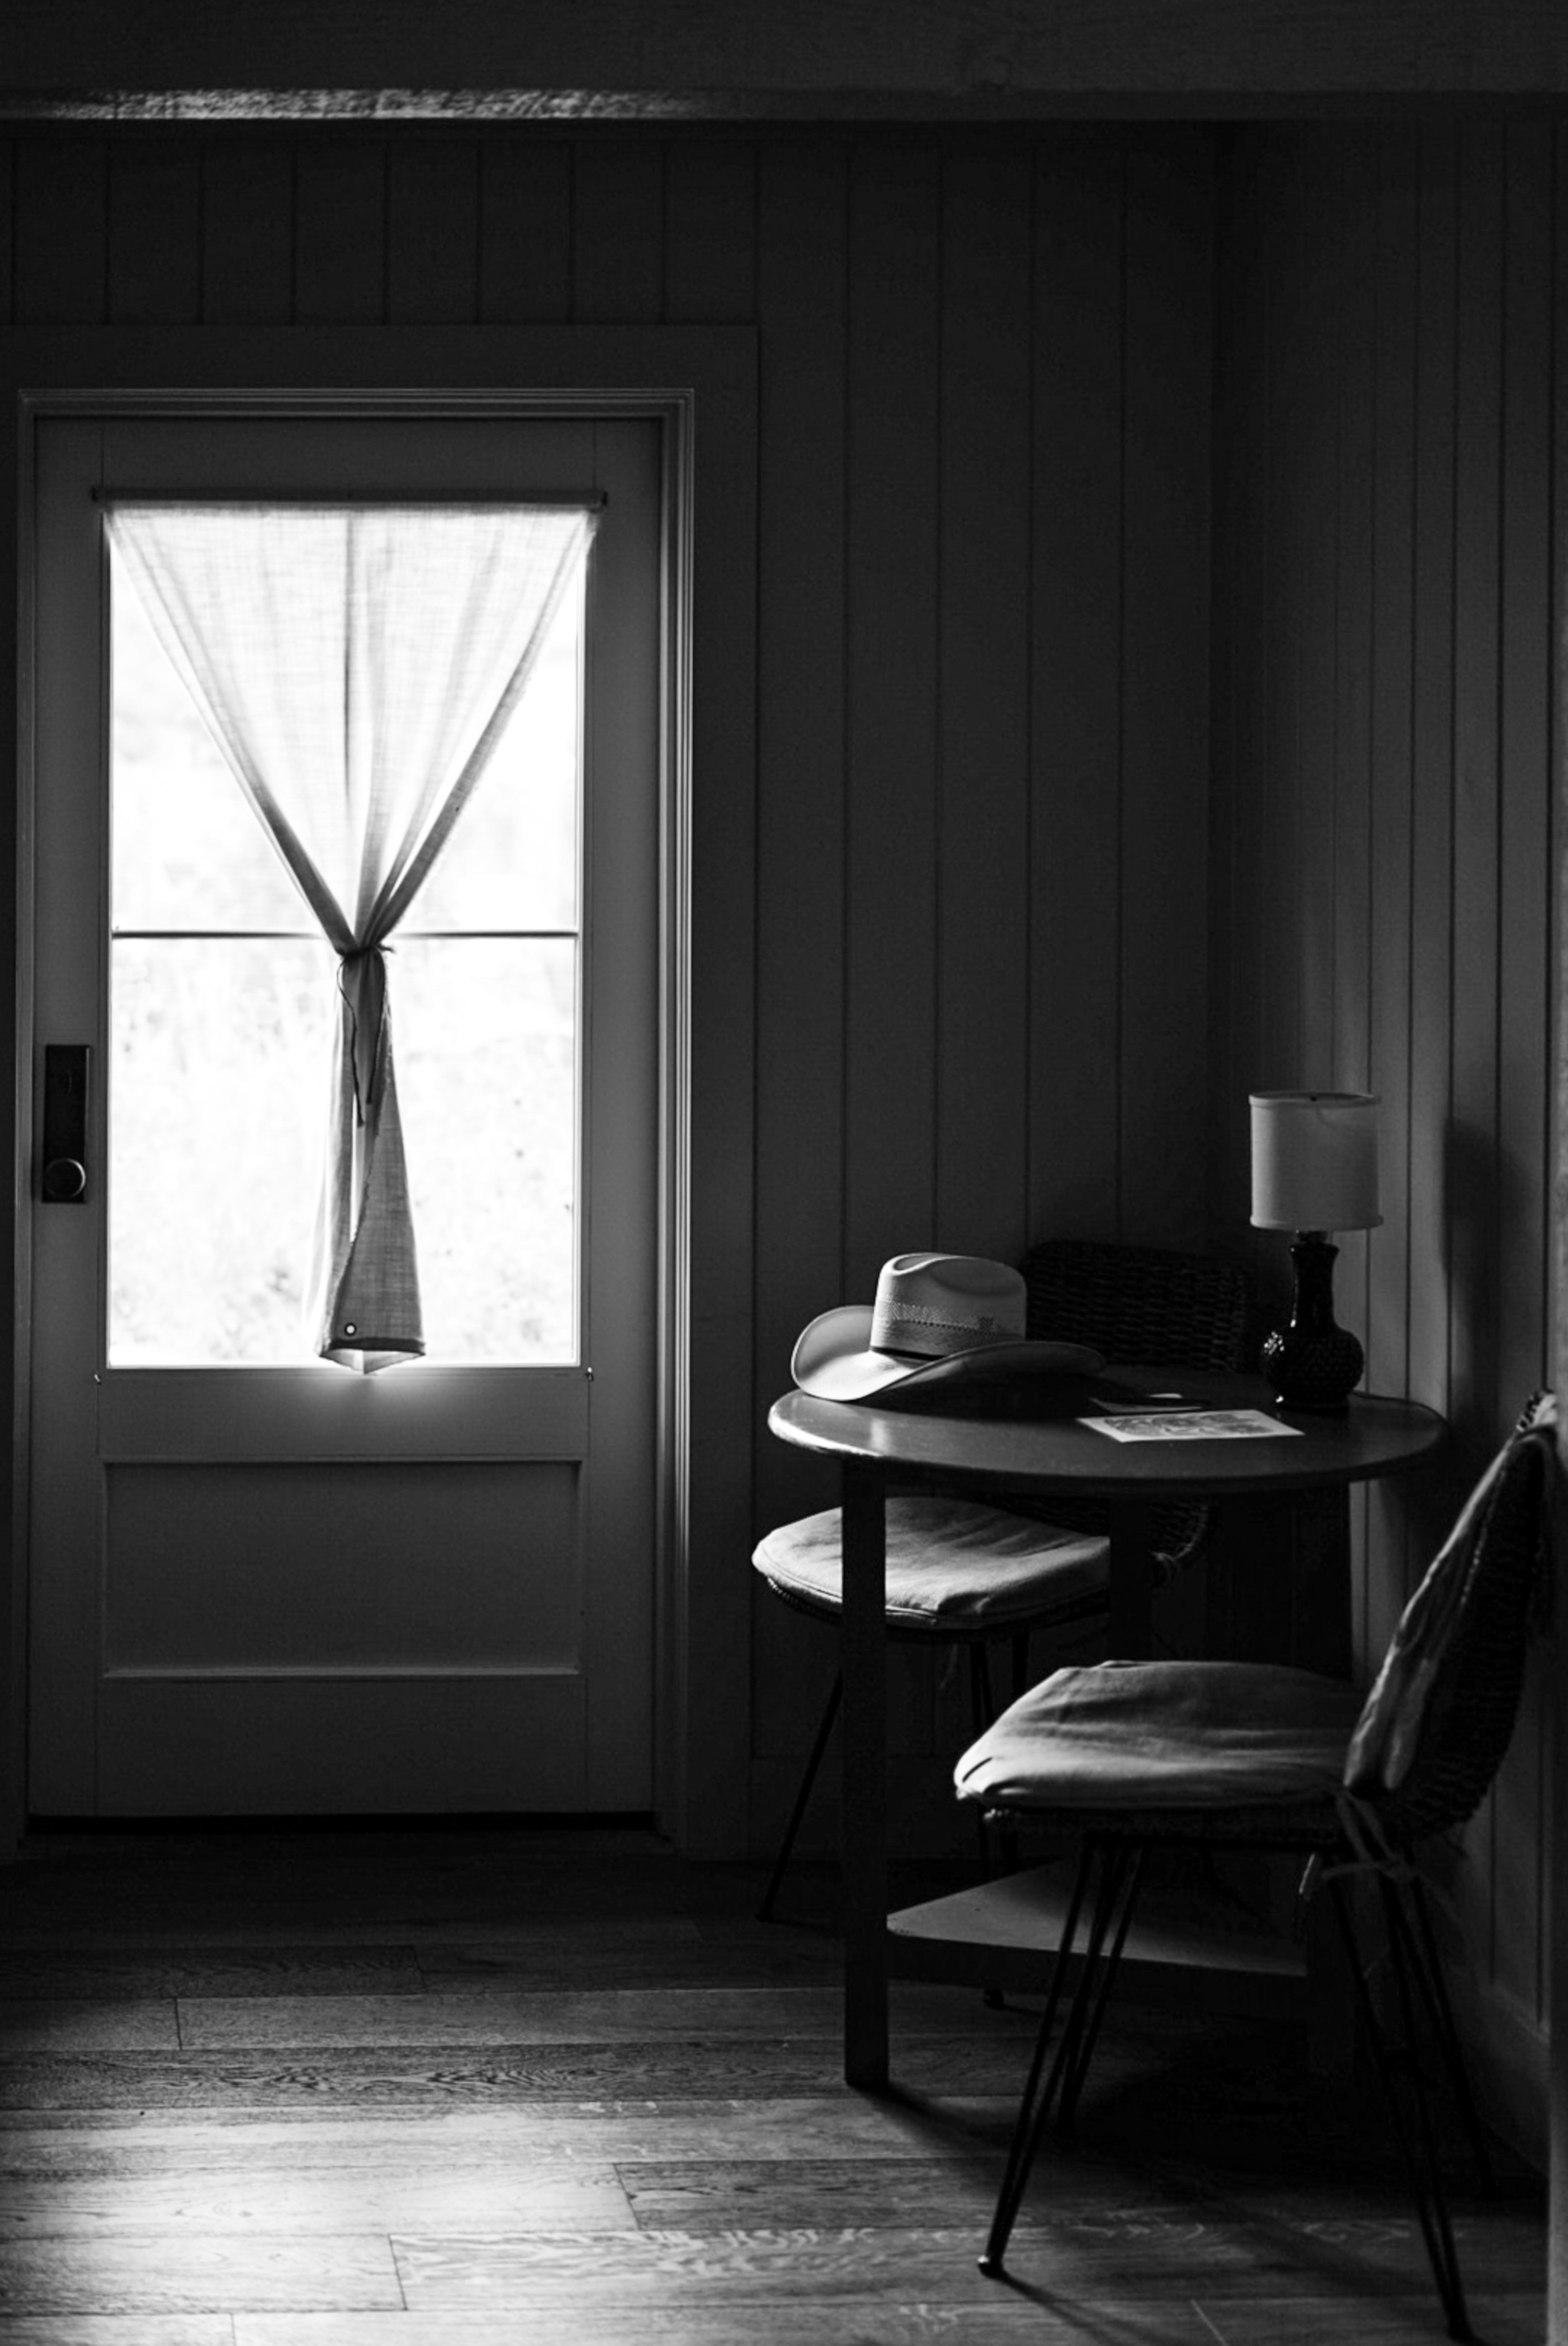 1920x1080 Background interior, miscellanea, miscellaneous, bw, chb, window, room, armchair